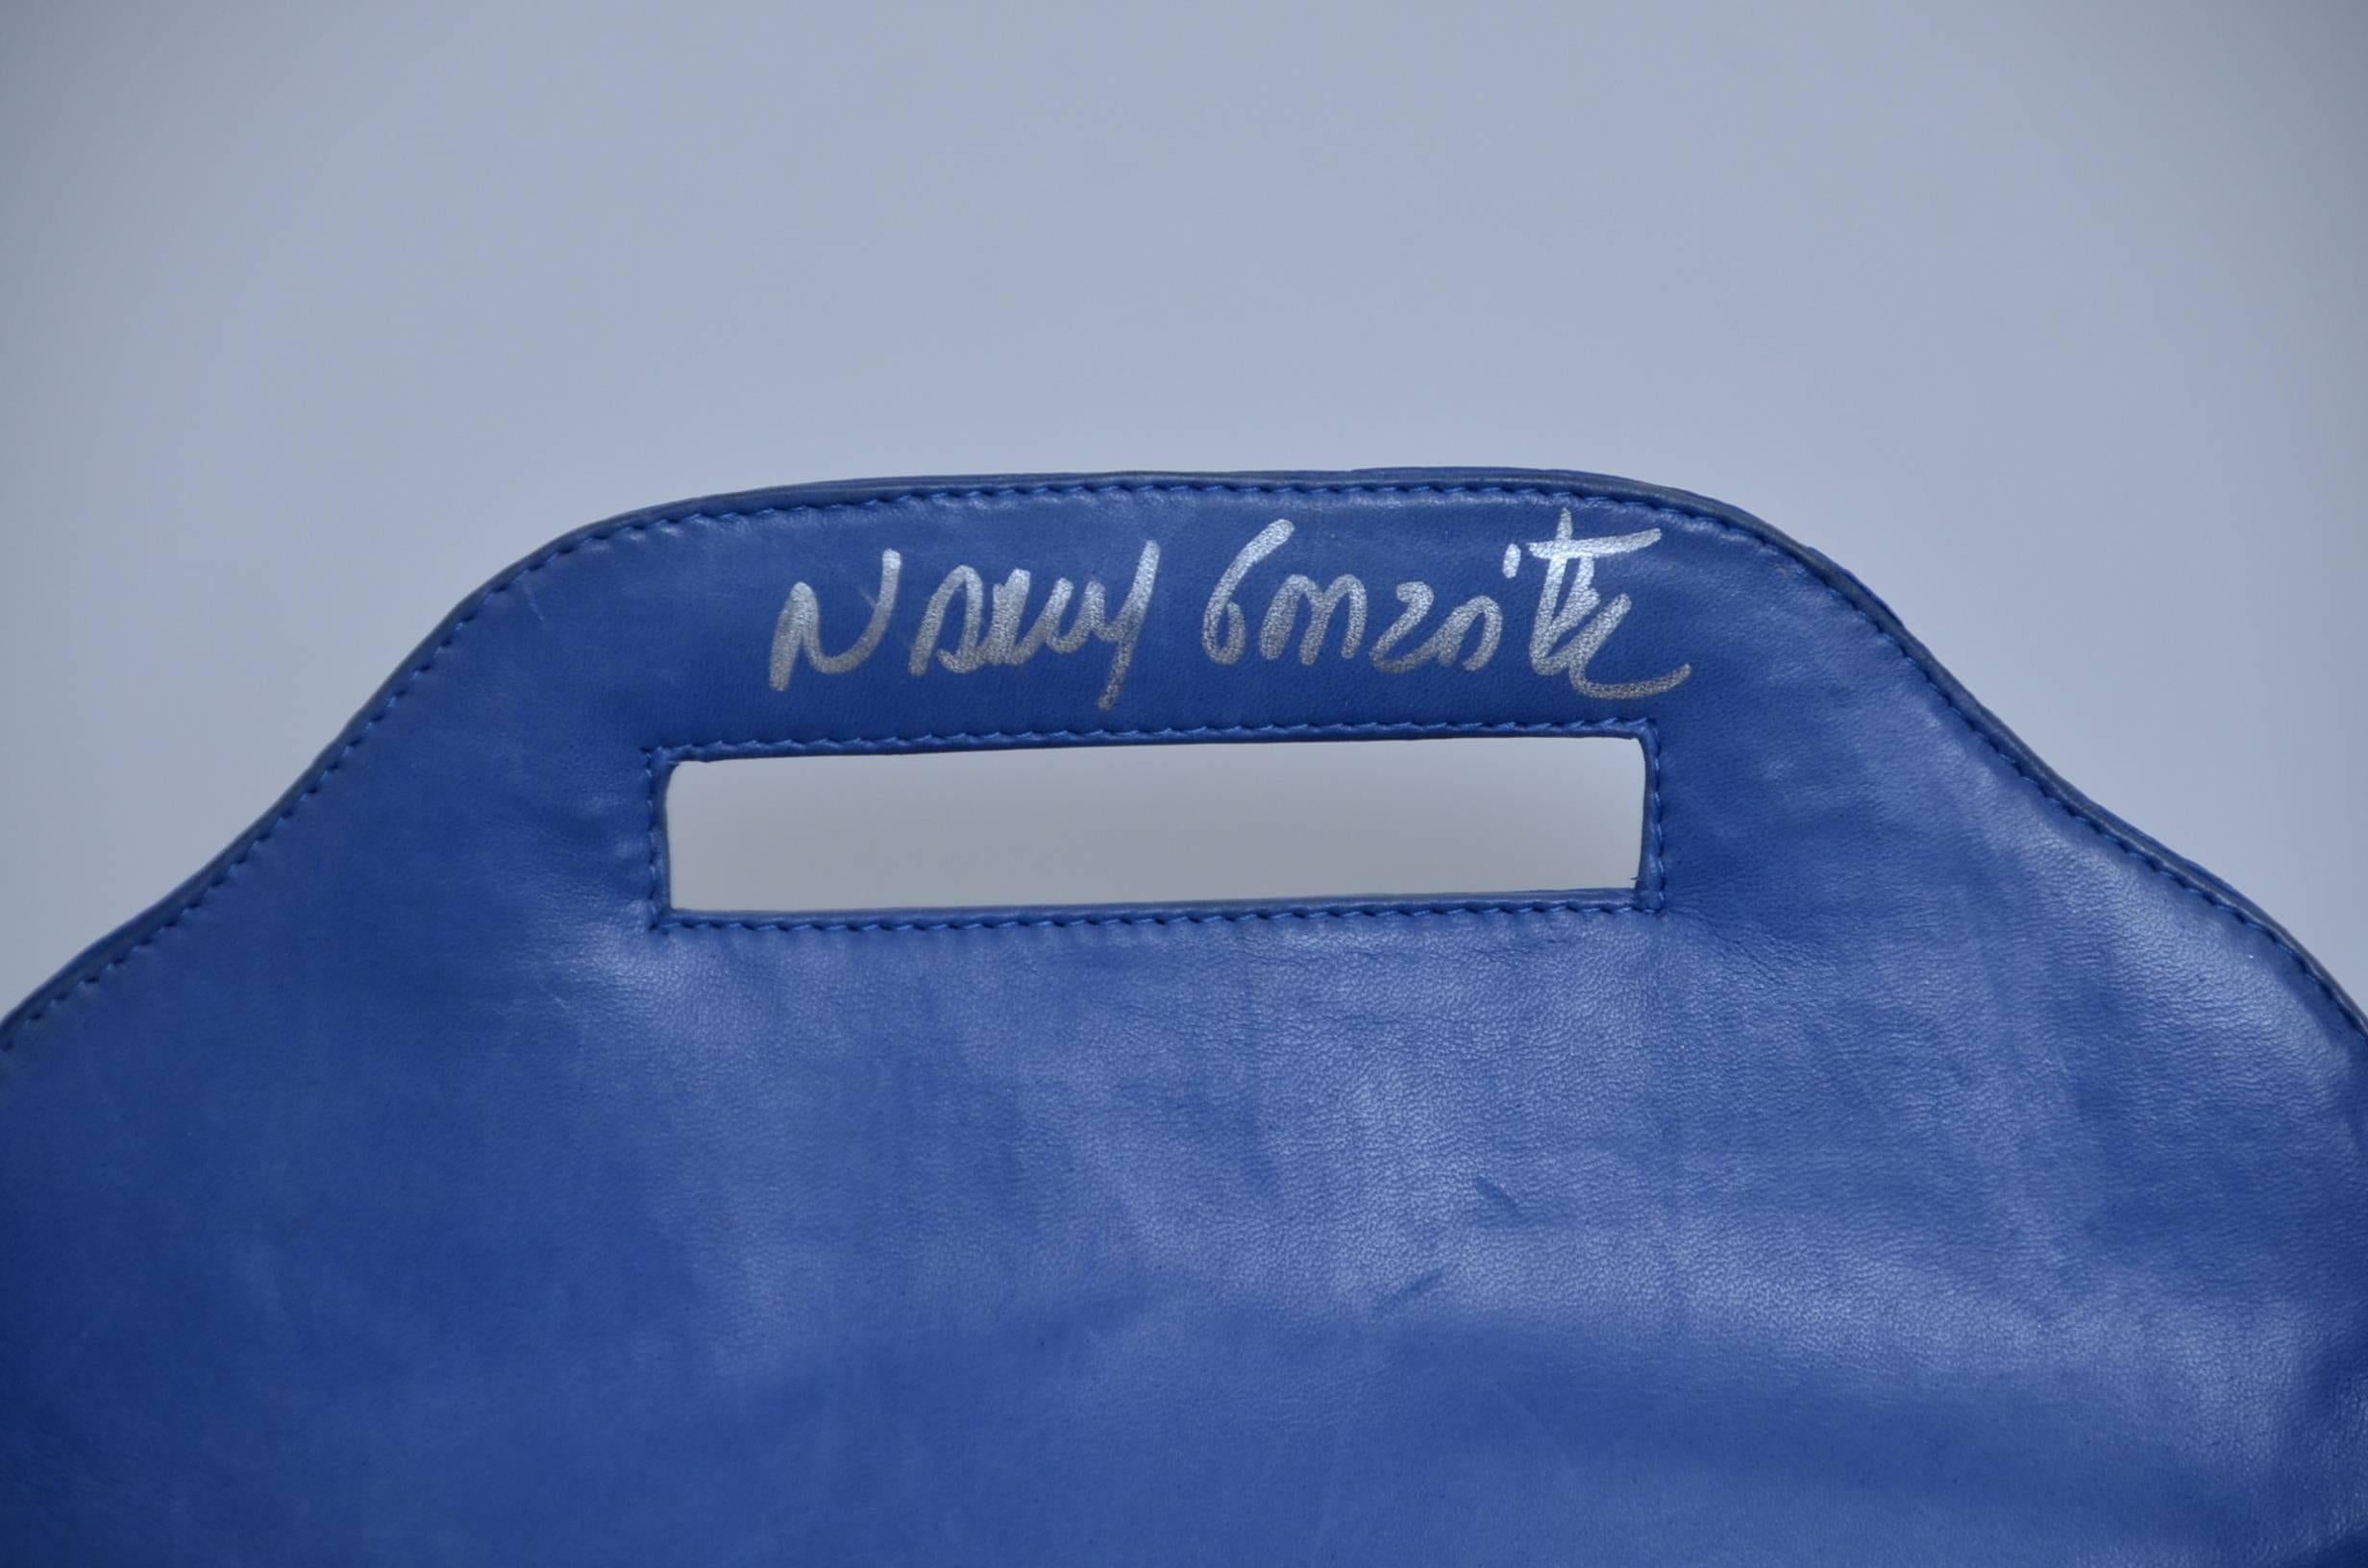 Nancy Gonzales  Crocodile Tote Handbag  Personally Signed By Nancy Gonzales  4